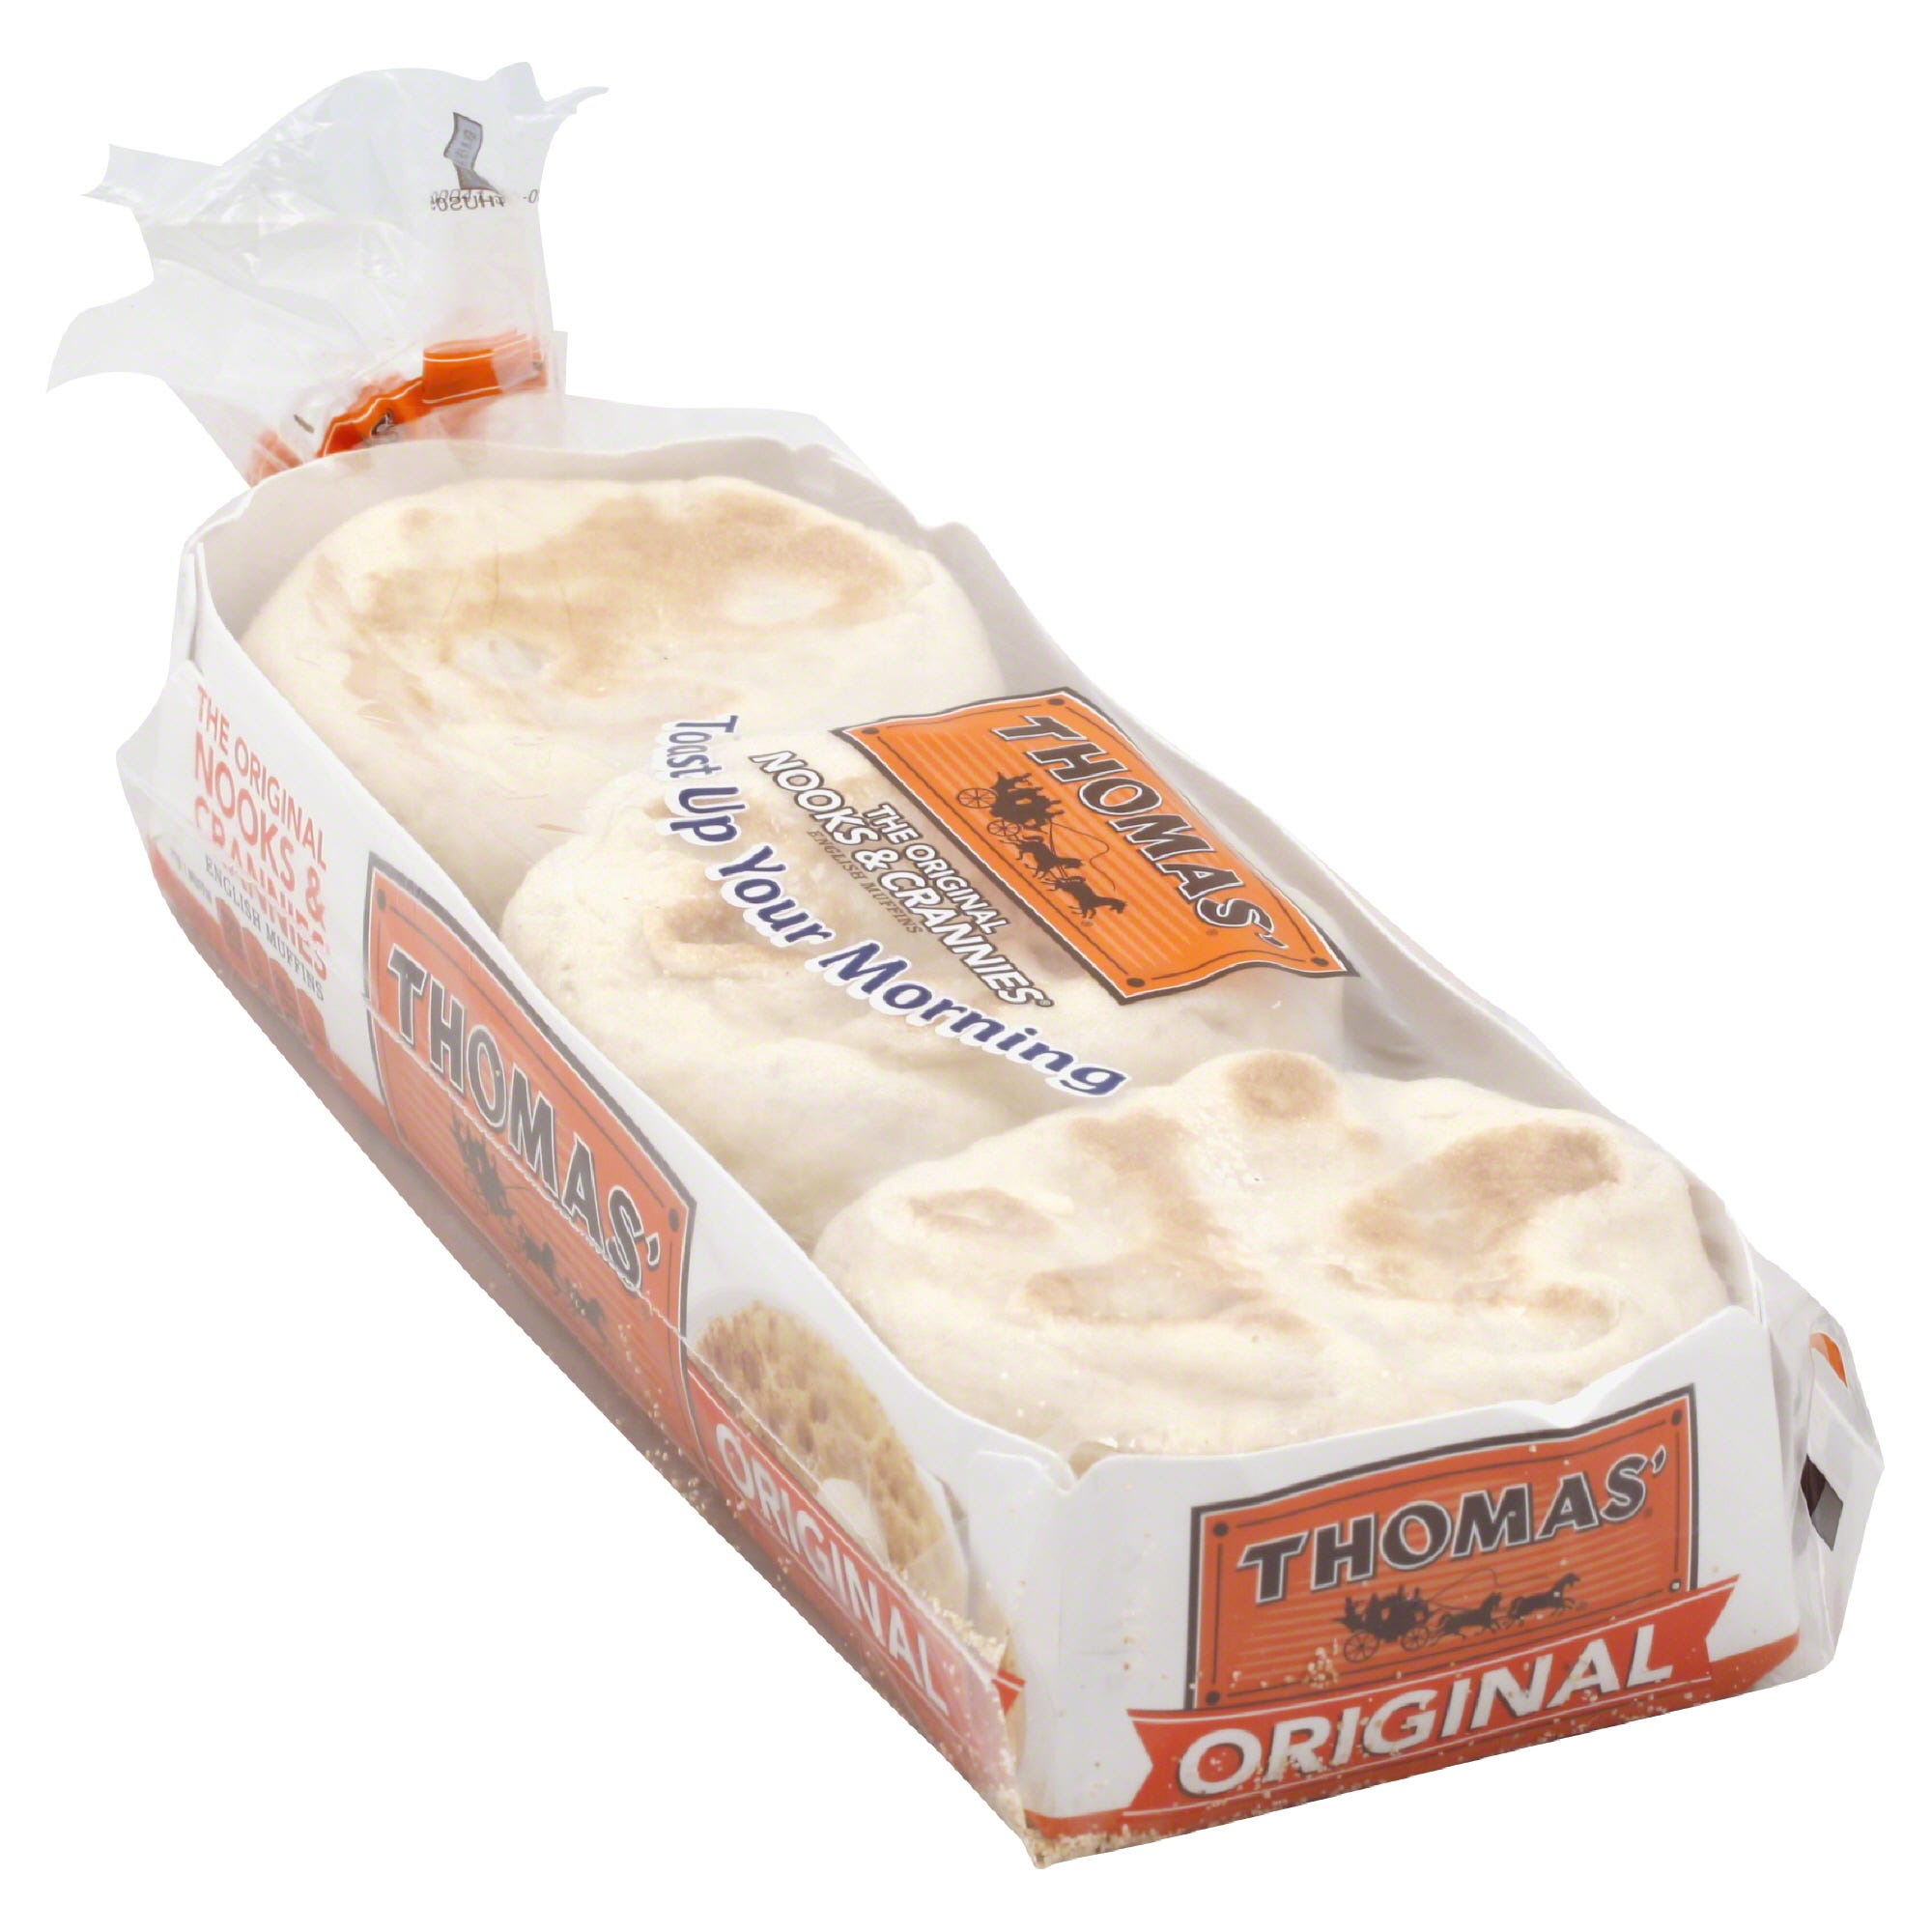 Thomas English Muffins, Original - 12 oz, 6 ct